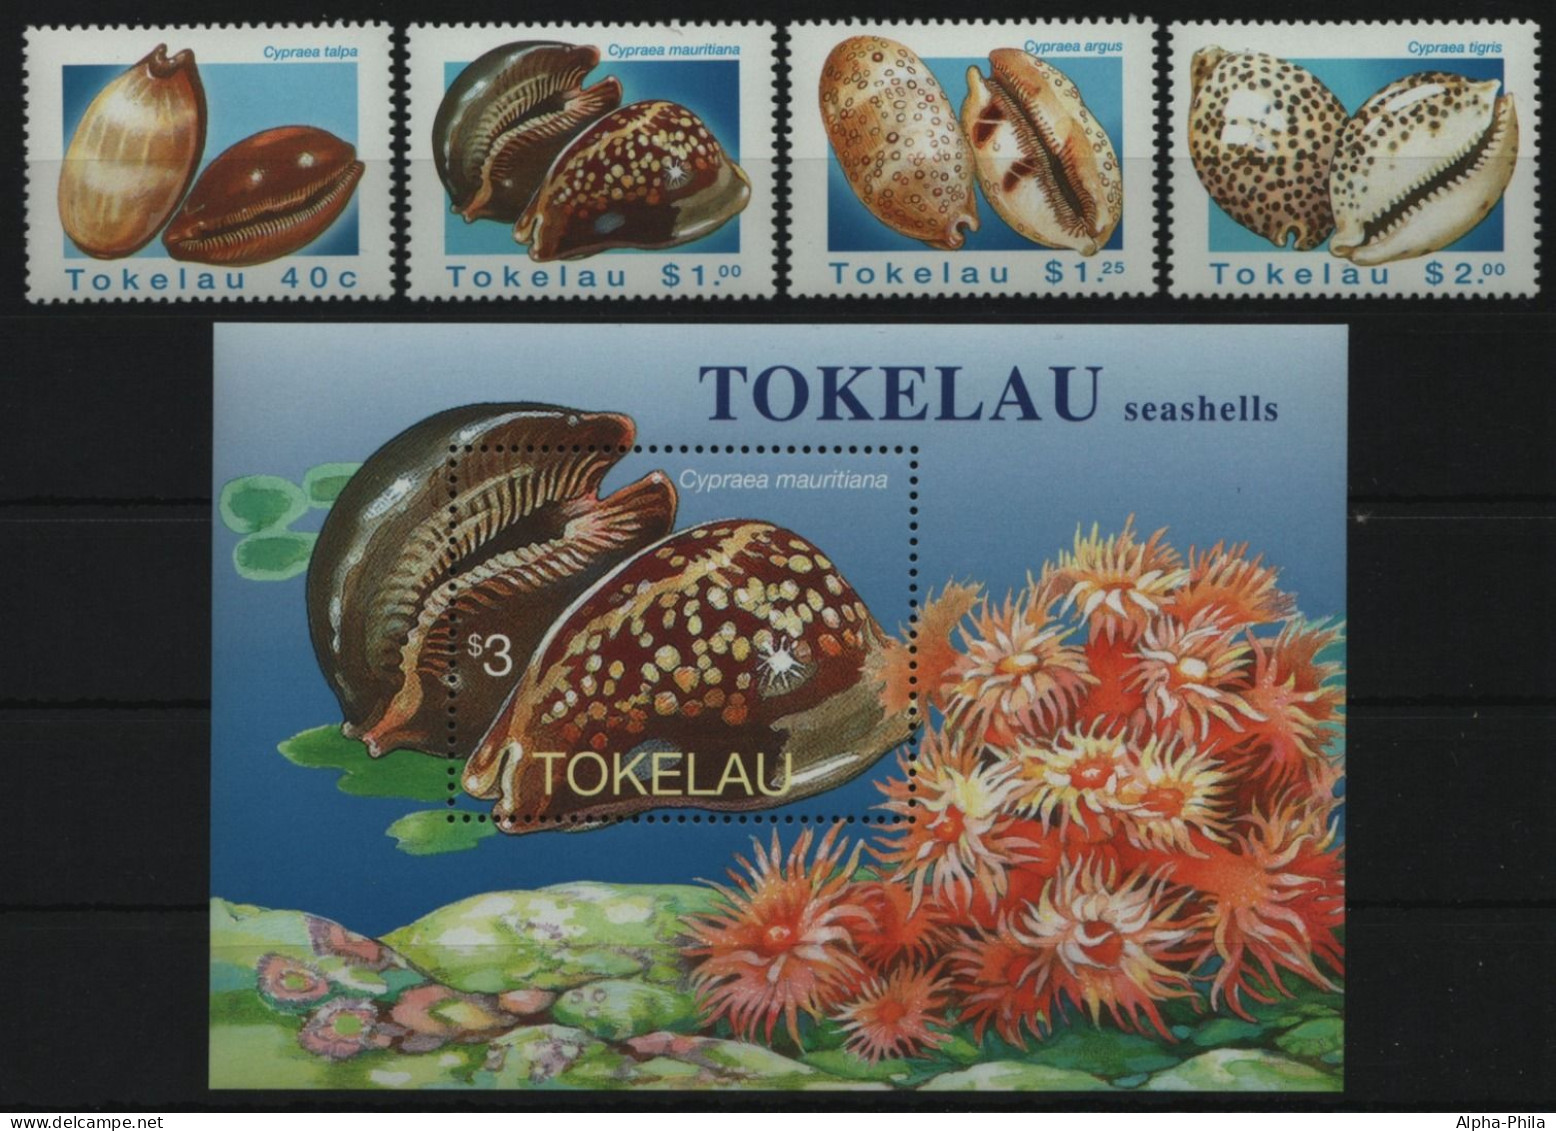 Tokelau 1996 - Mi-Nr. 238-241 & Block 9 ** - MNH - Meeresschnecke / Marine Snail - Tokelau